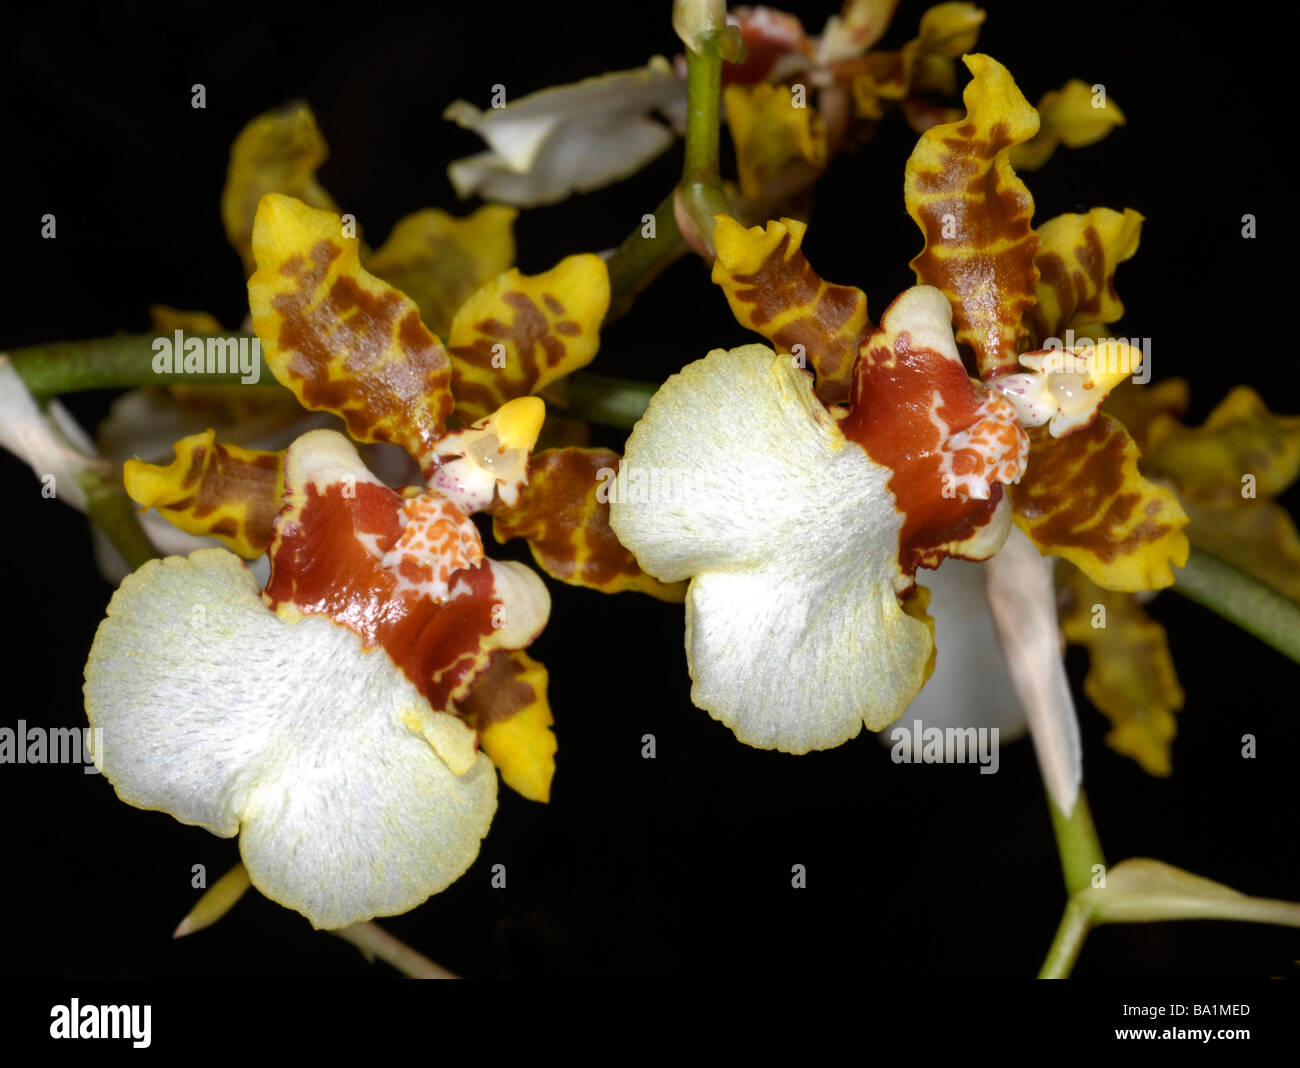 Oncidium orchids Stock Photo